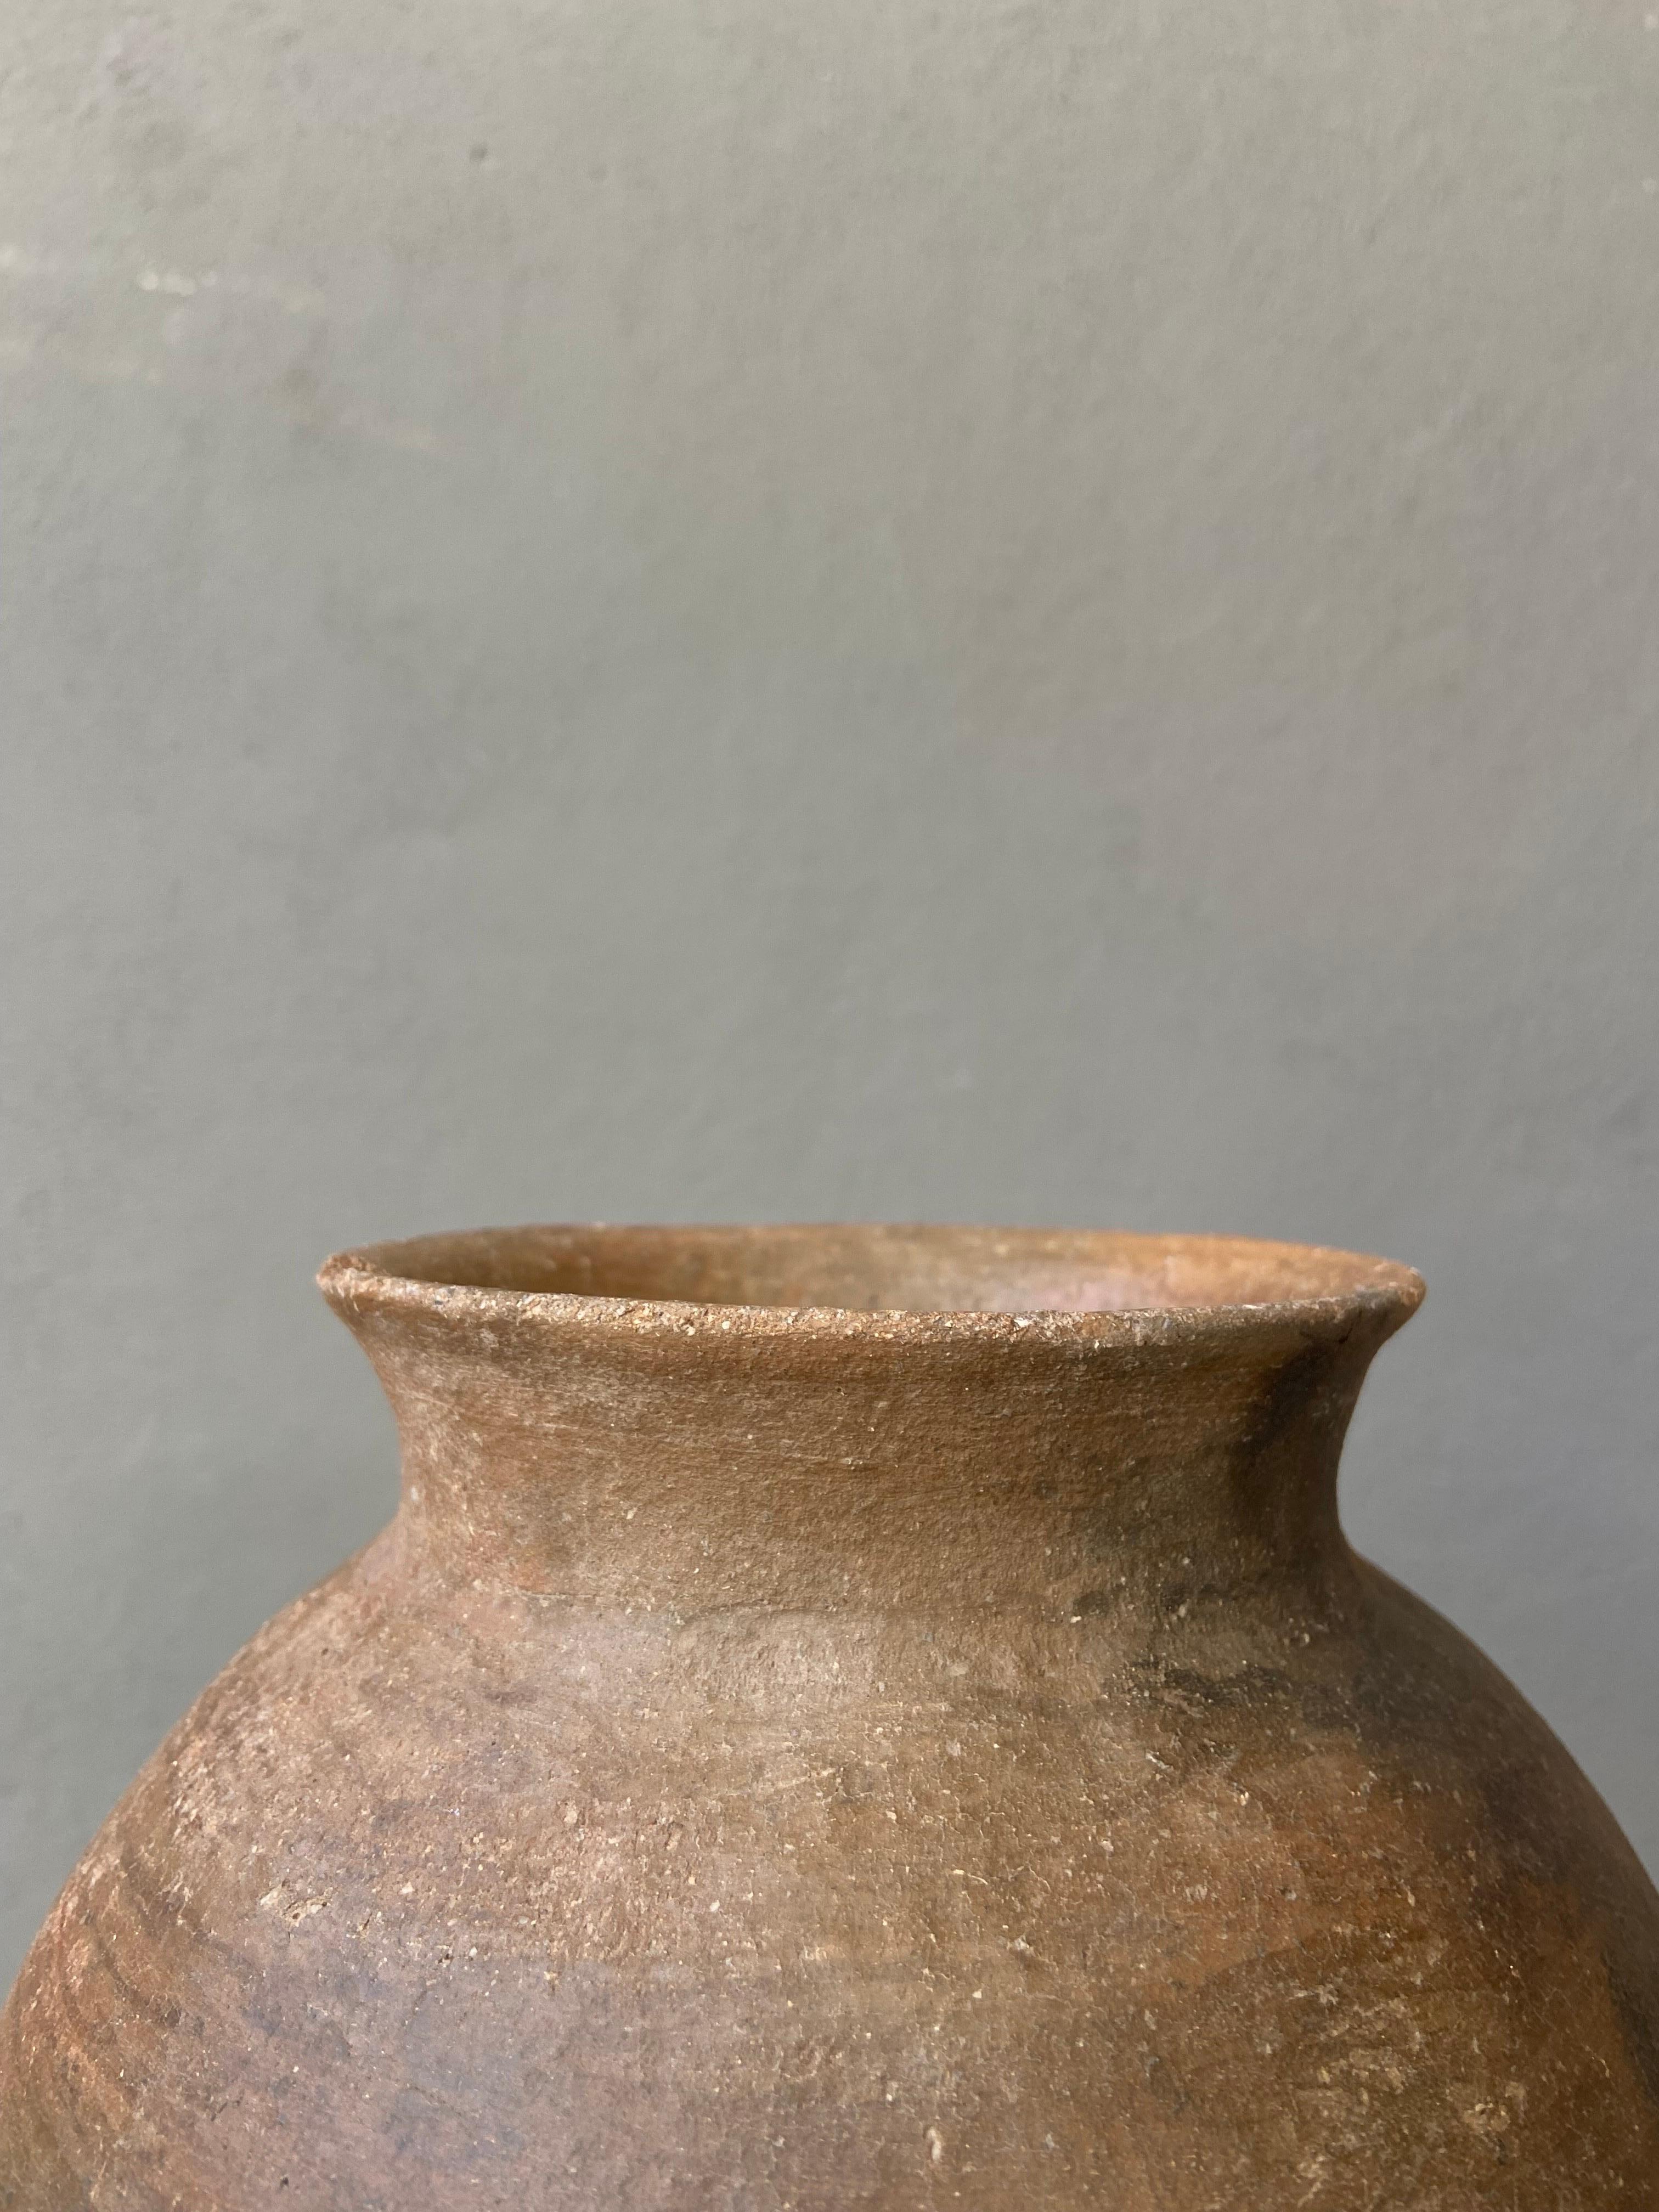 Ceramic Terracotta Cooking Pot From The Mixteca Region of Oaxaca, Mexico